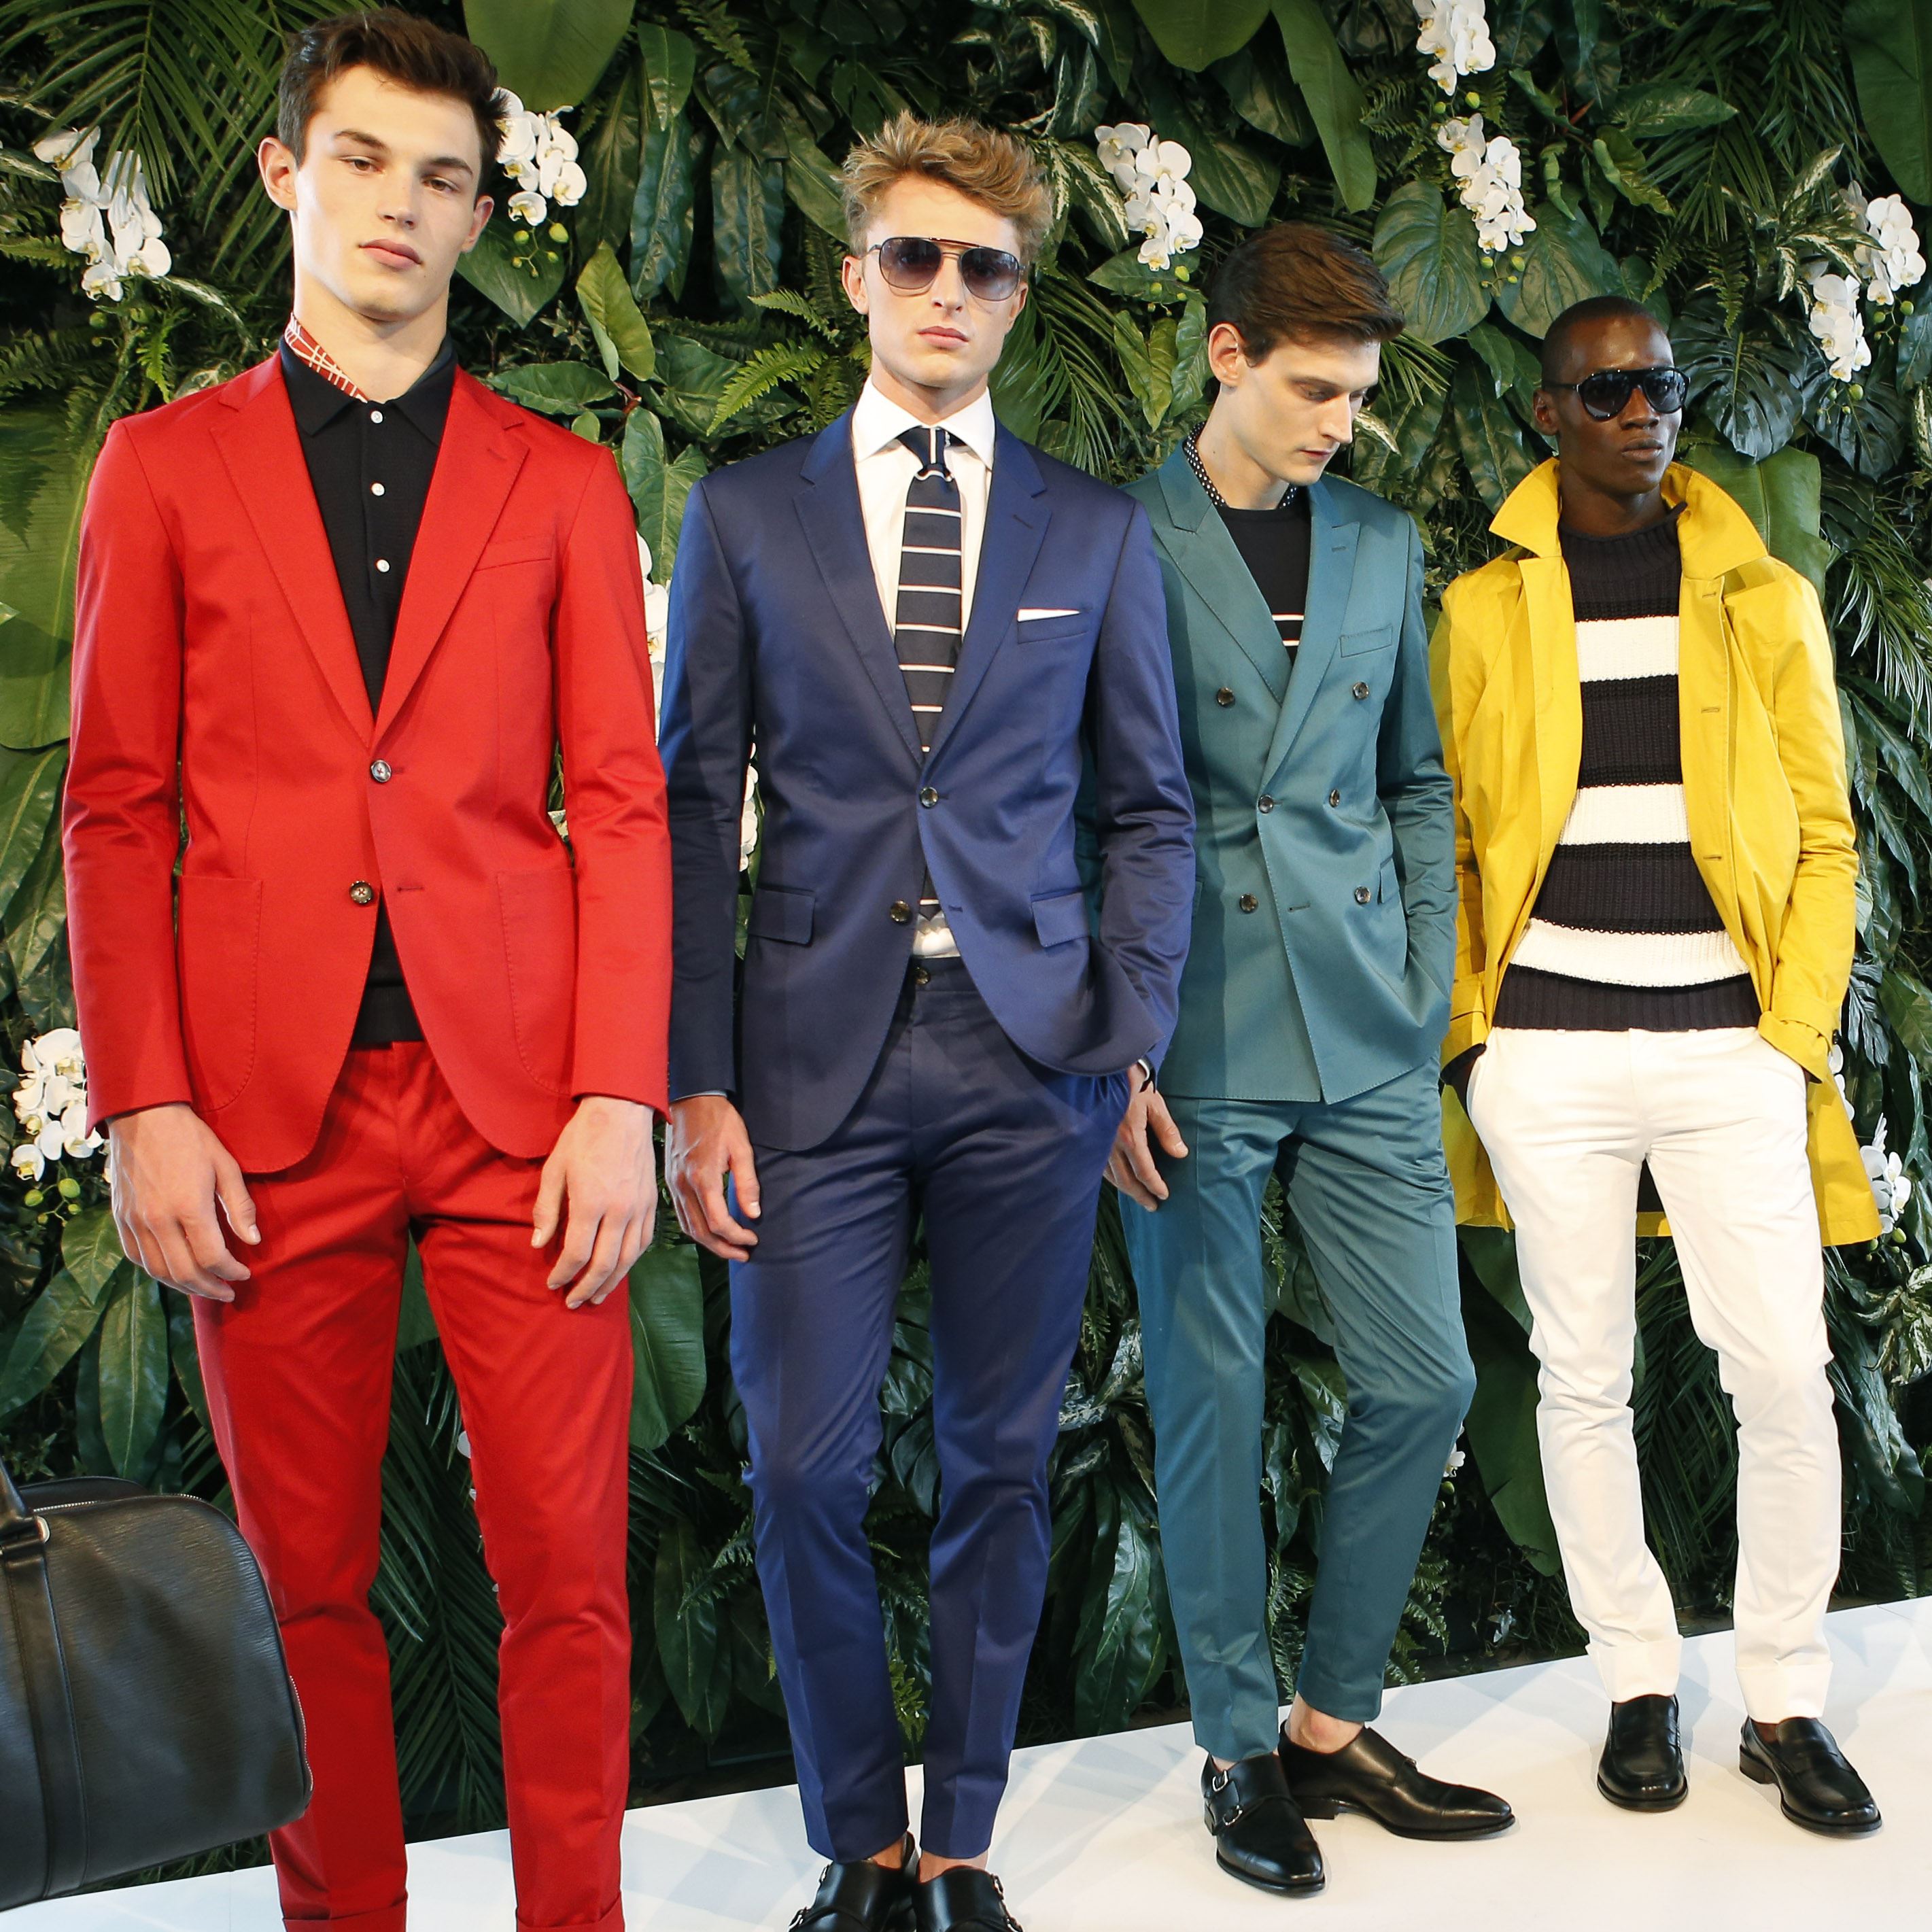 New York Fashion Week: Men's - A Success